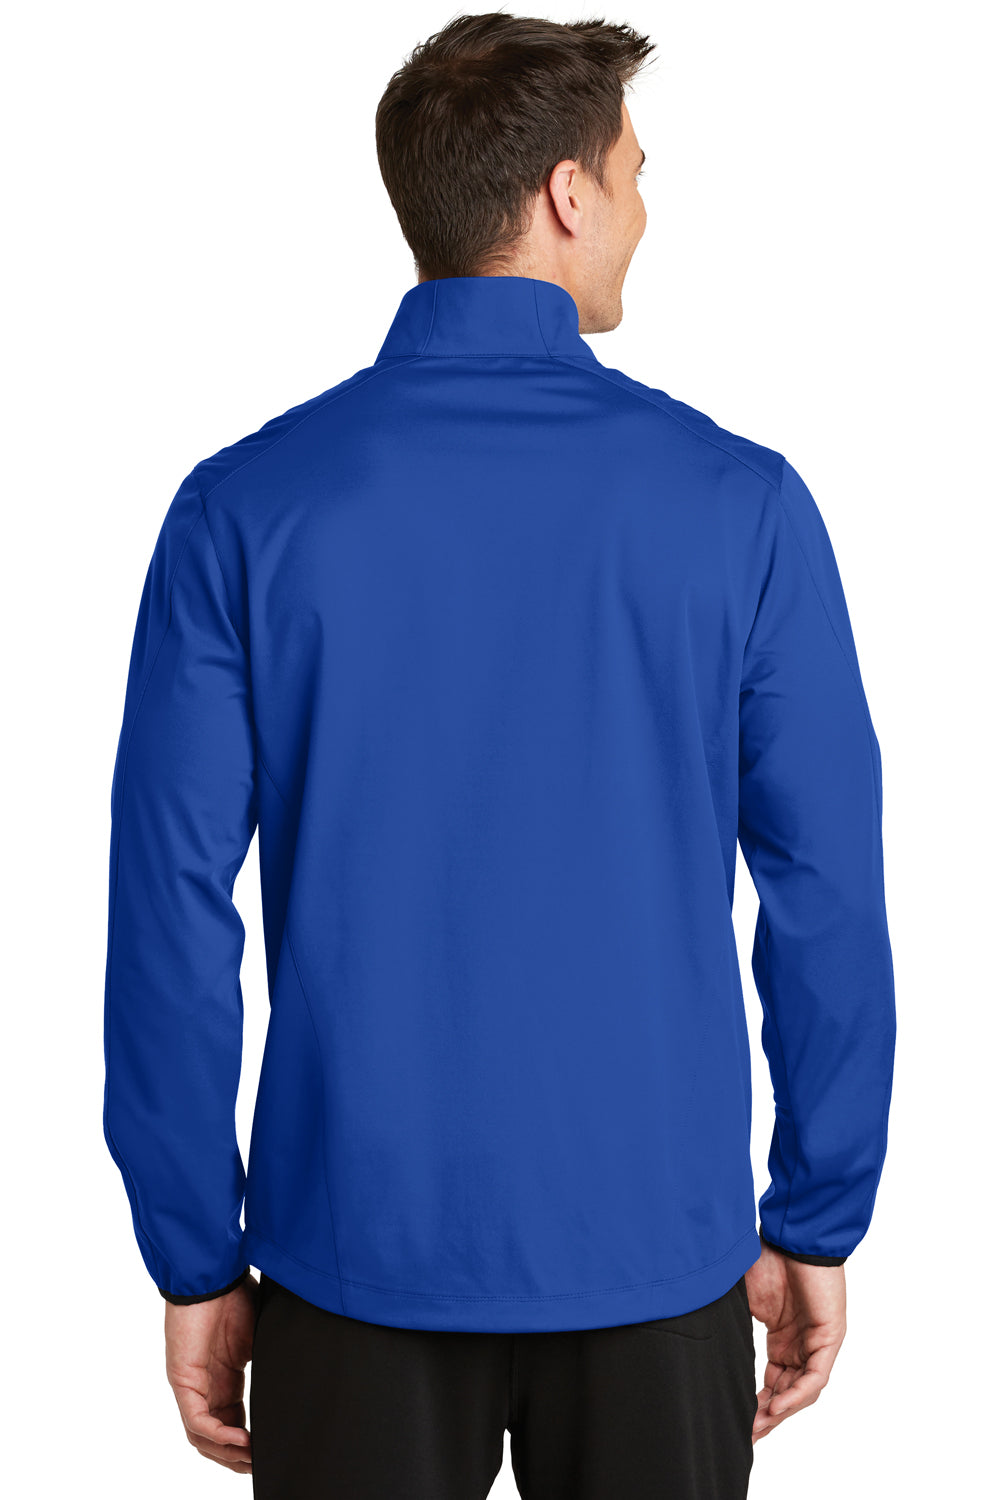 Port Authority J717 Mens Active Wind & Water Resistant Full Zip Jacket Royal Blue Back